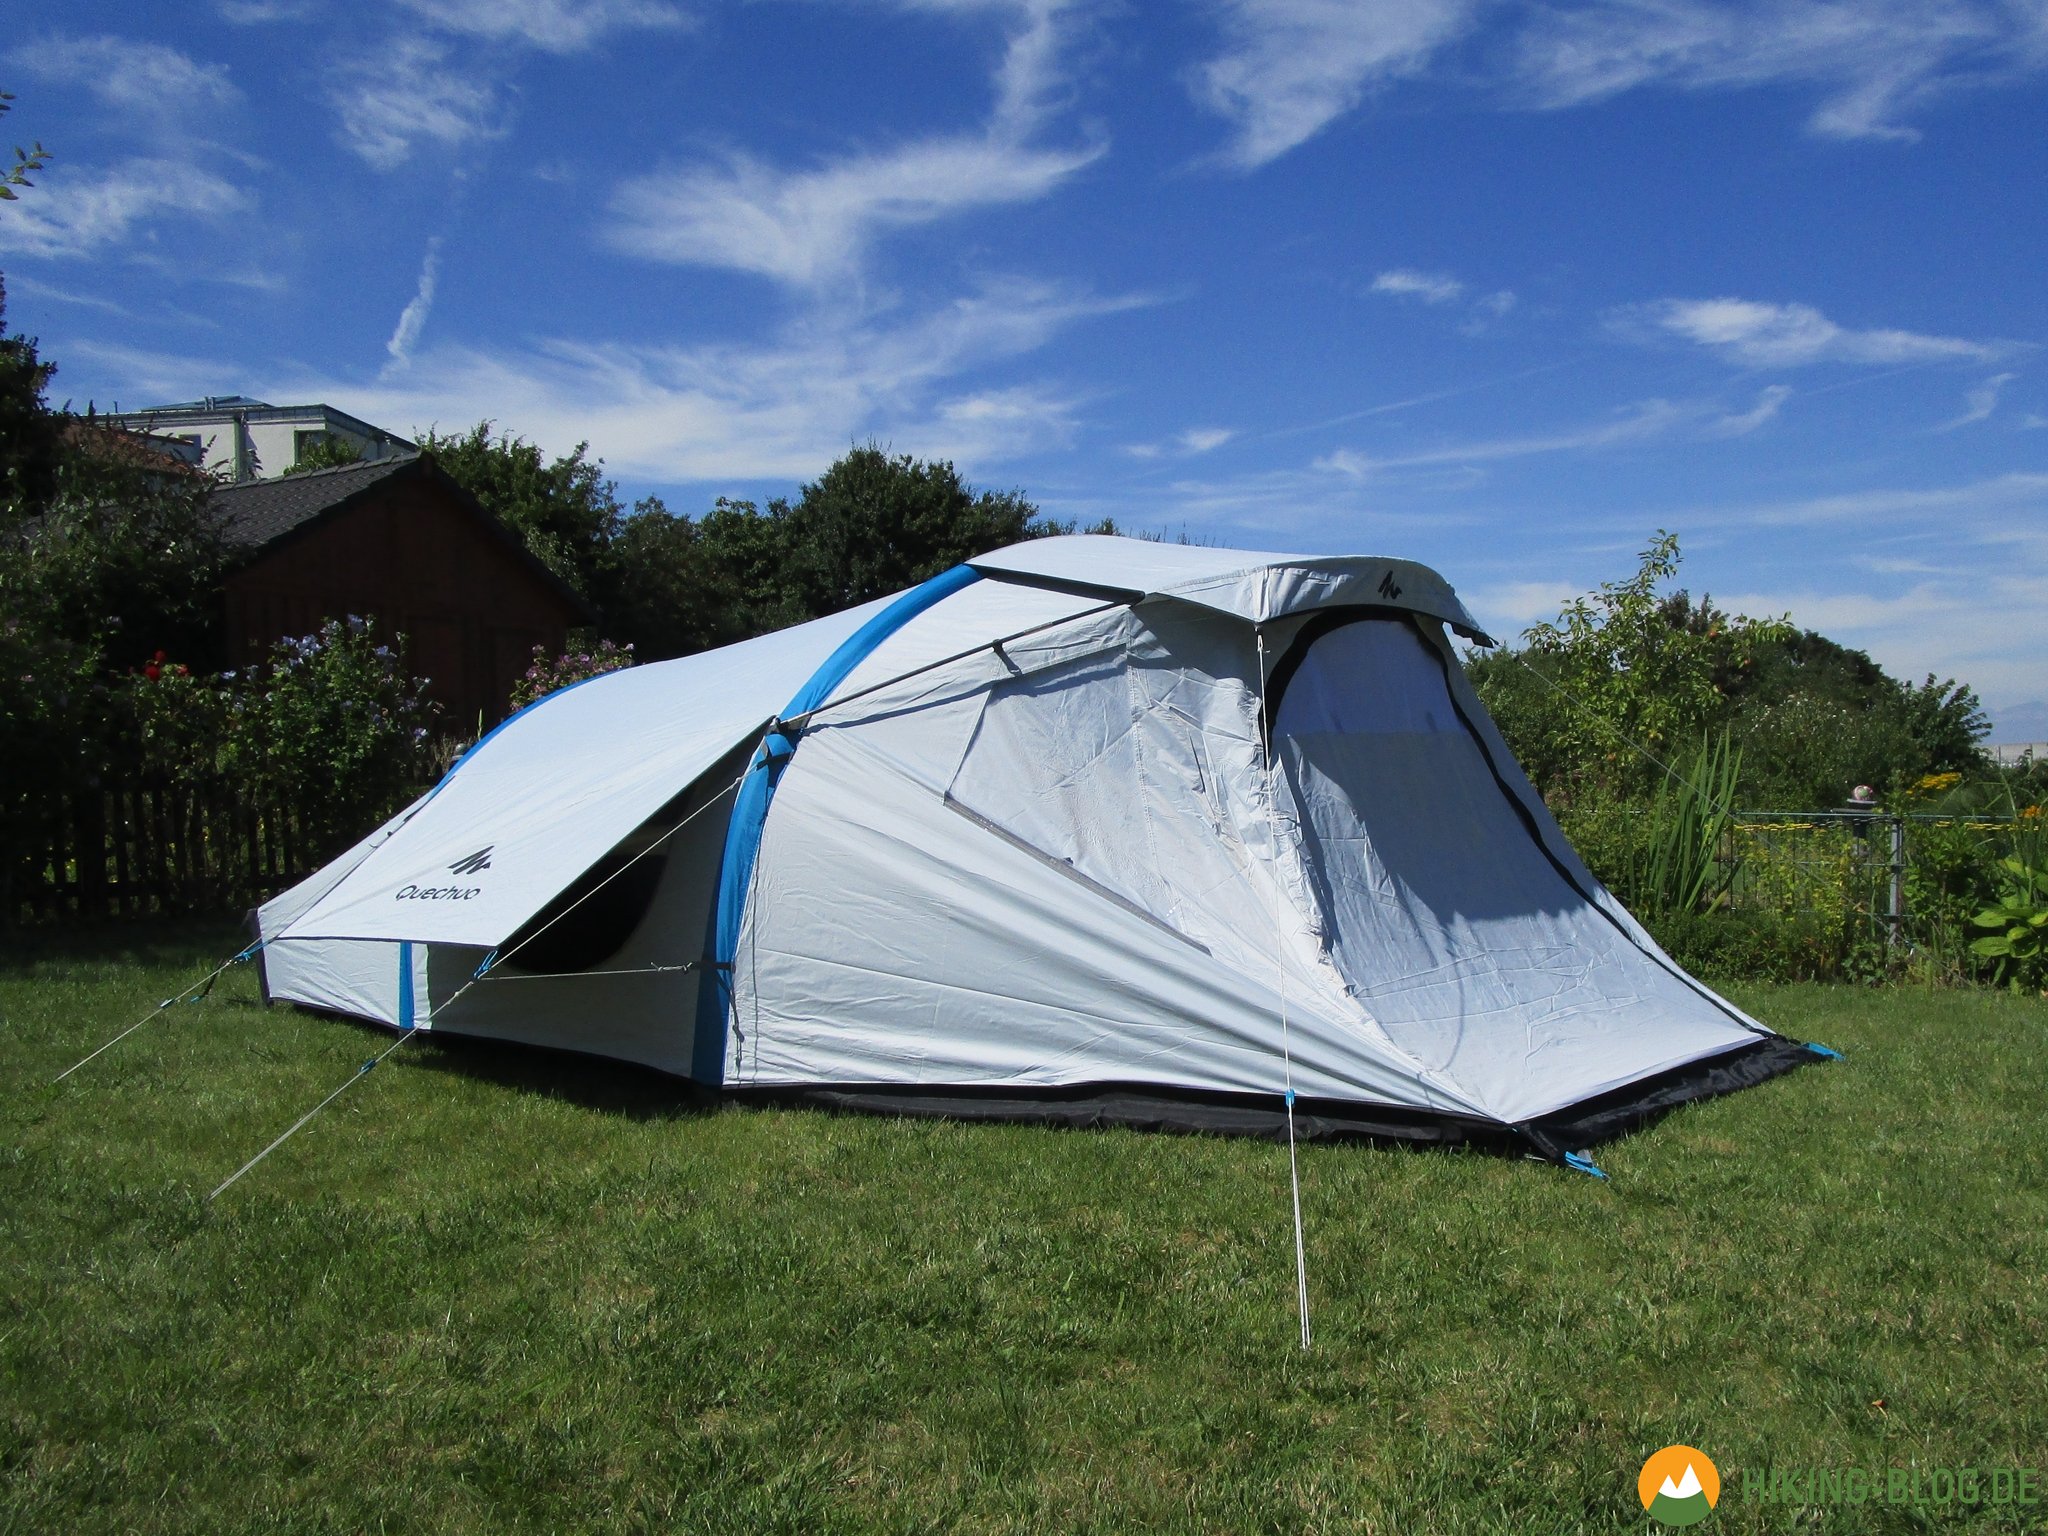 Familien Camping Zelt Stangenaufbau Wärme Arpenaz 4.1 für 4 Personen in 1 Kabine 